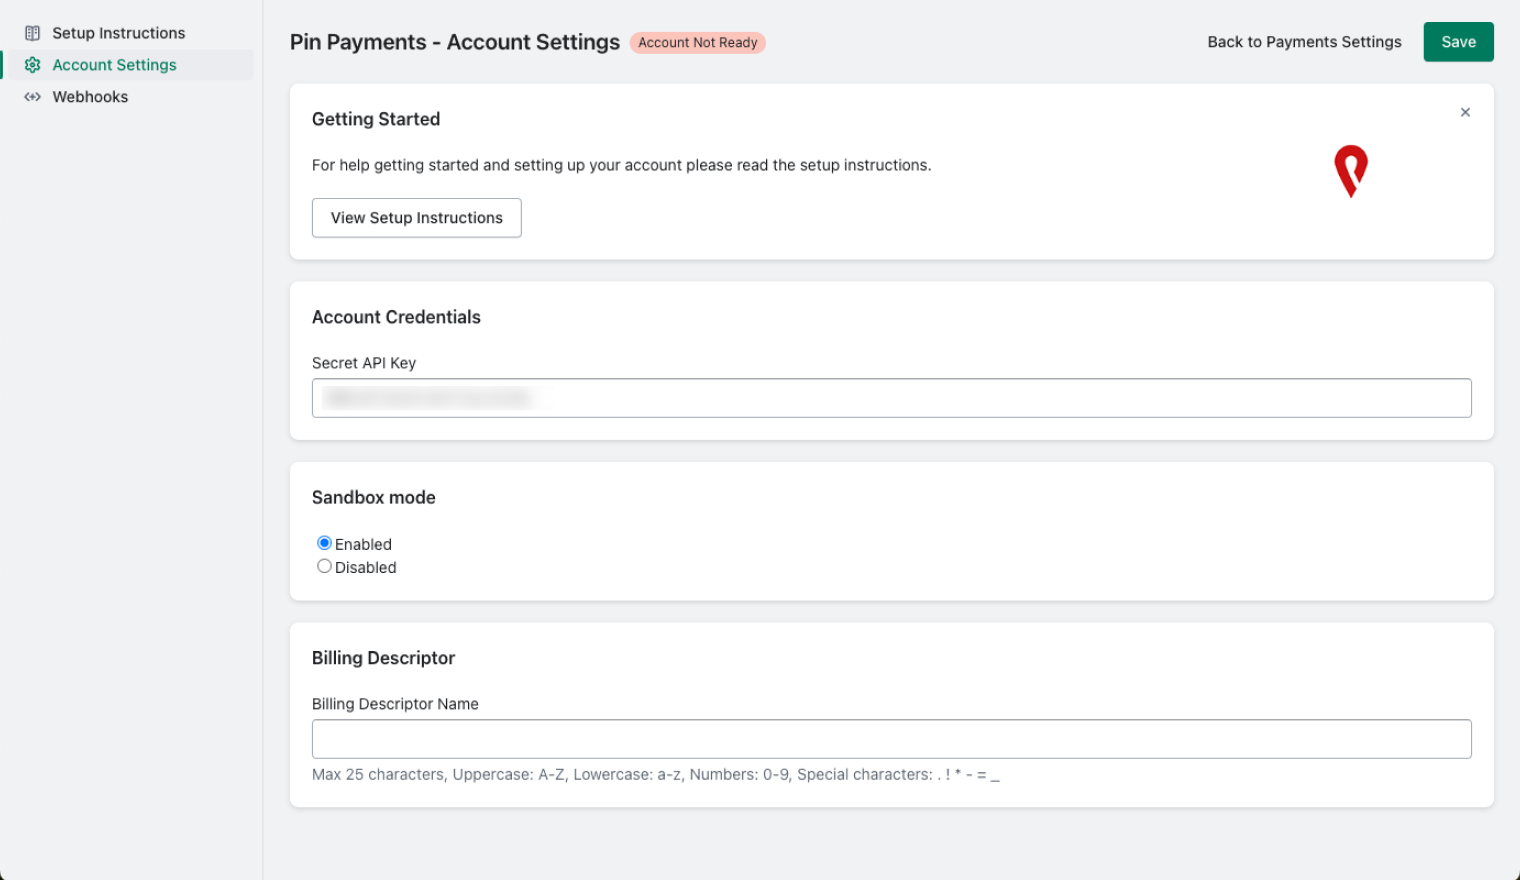 Configure the payments app